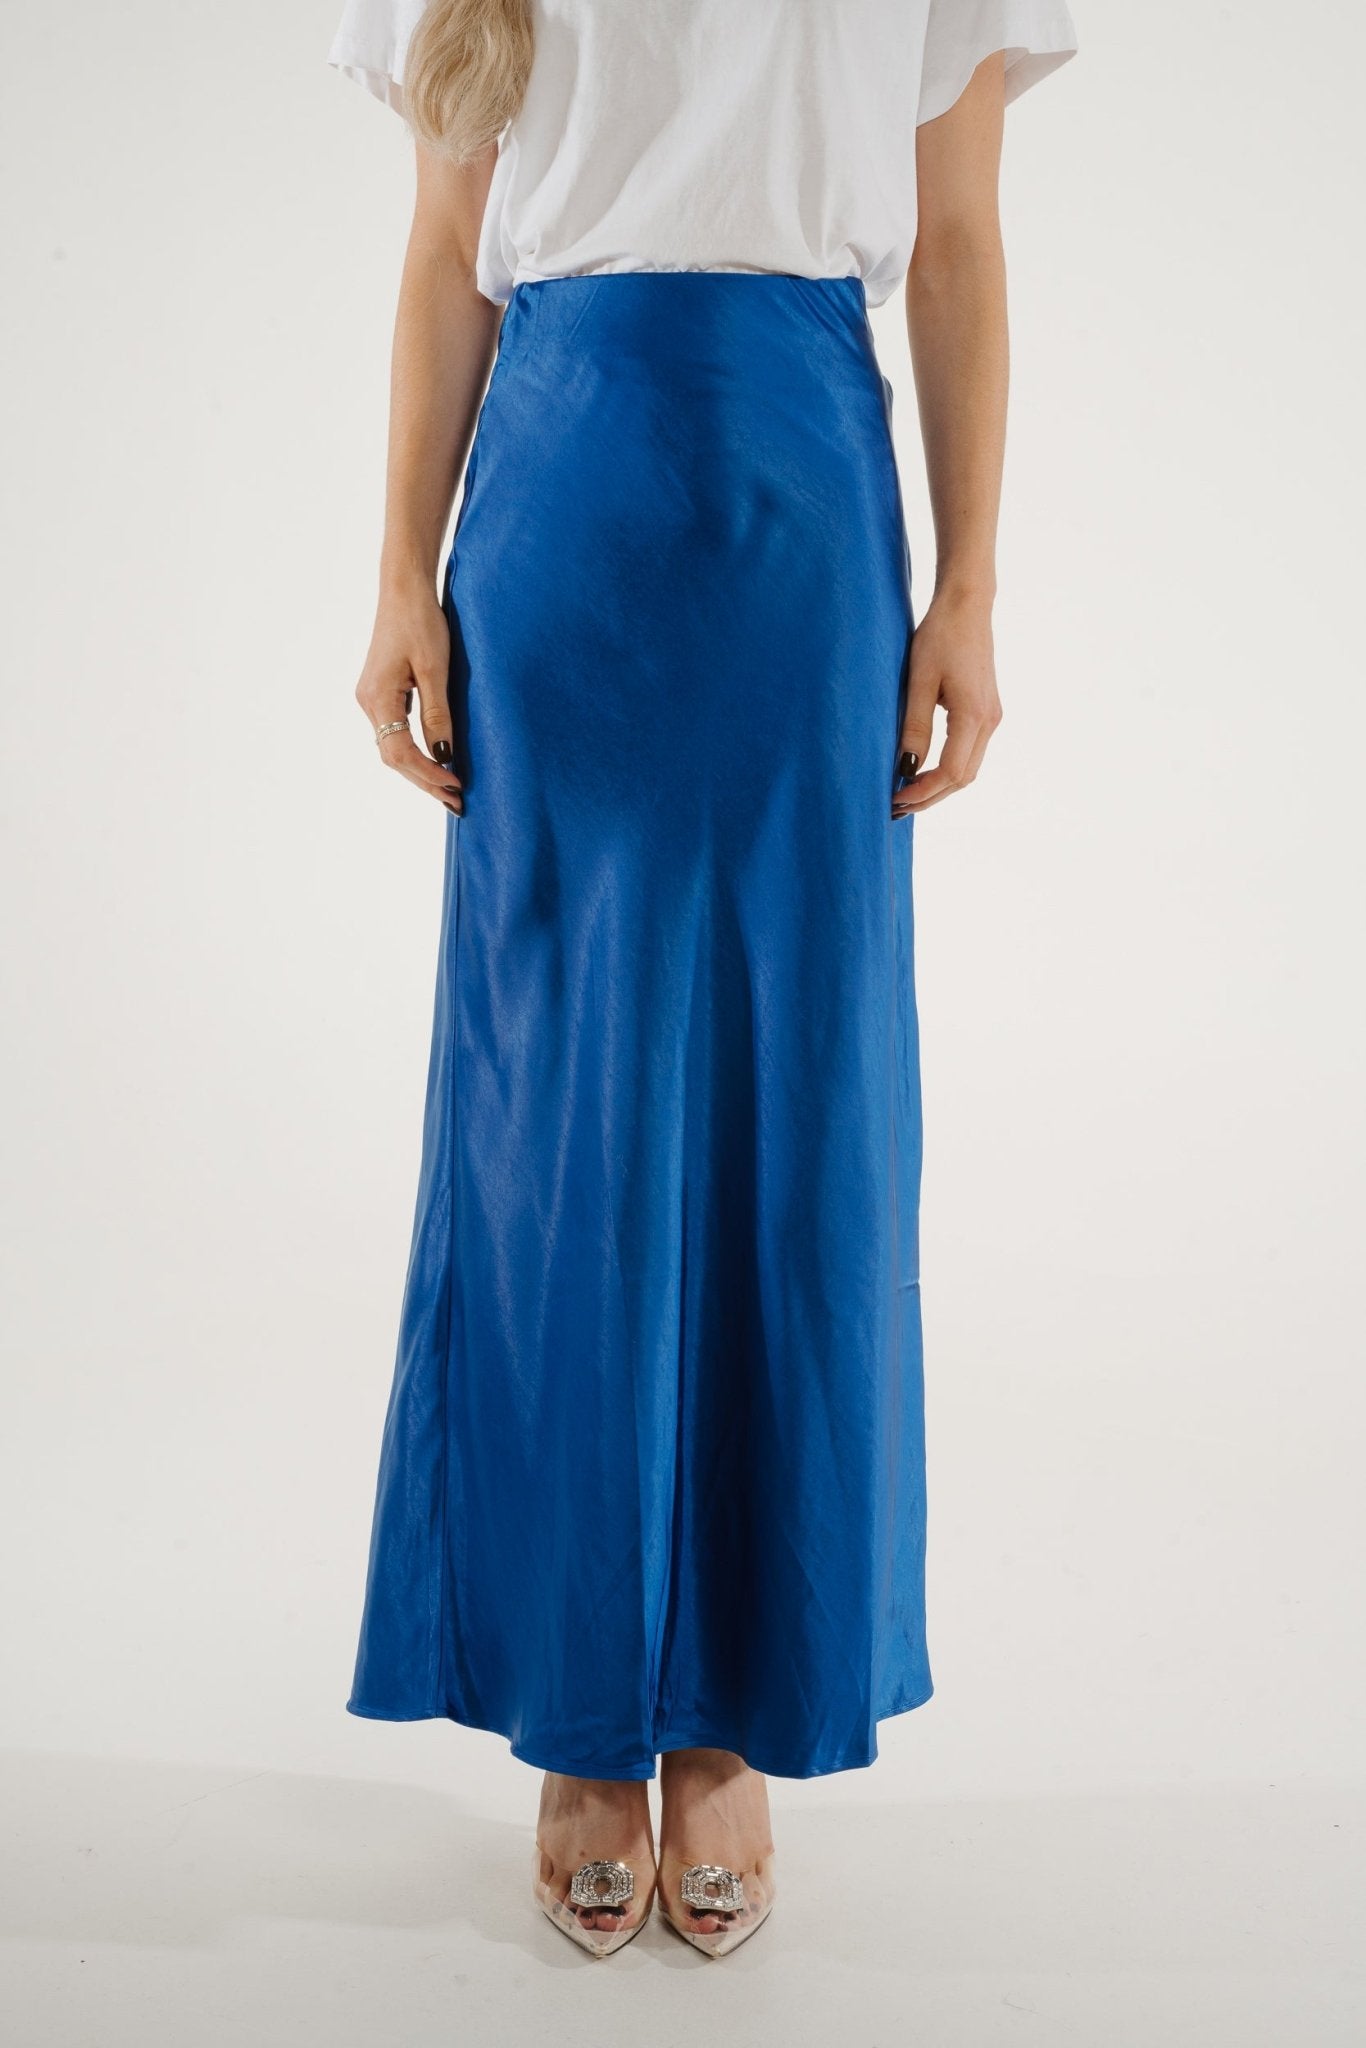 Jane Longline Satin Skirt In Blue - The Walk in Wardrobe